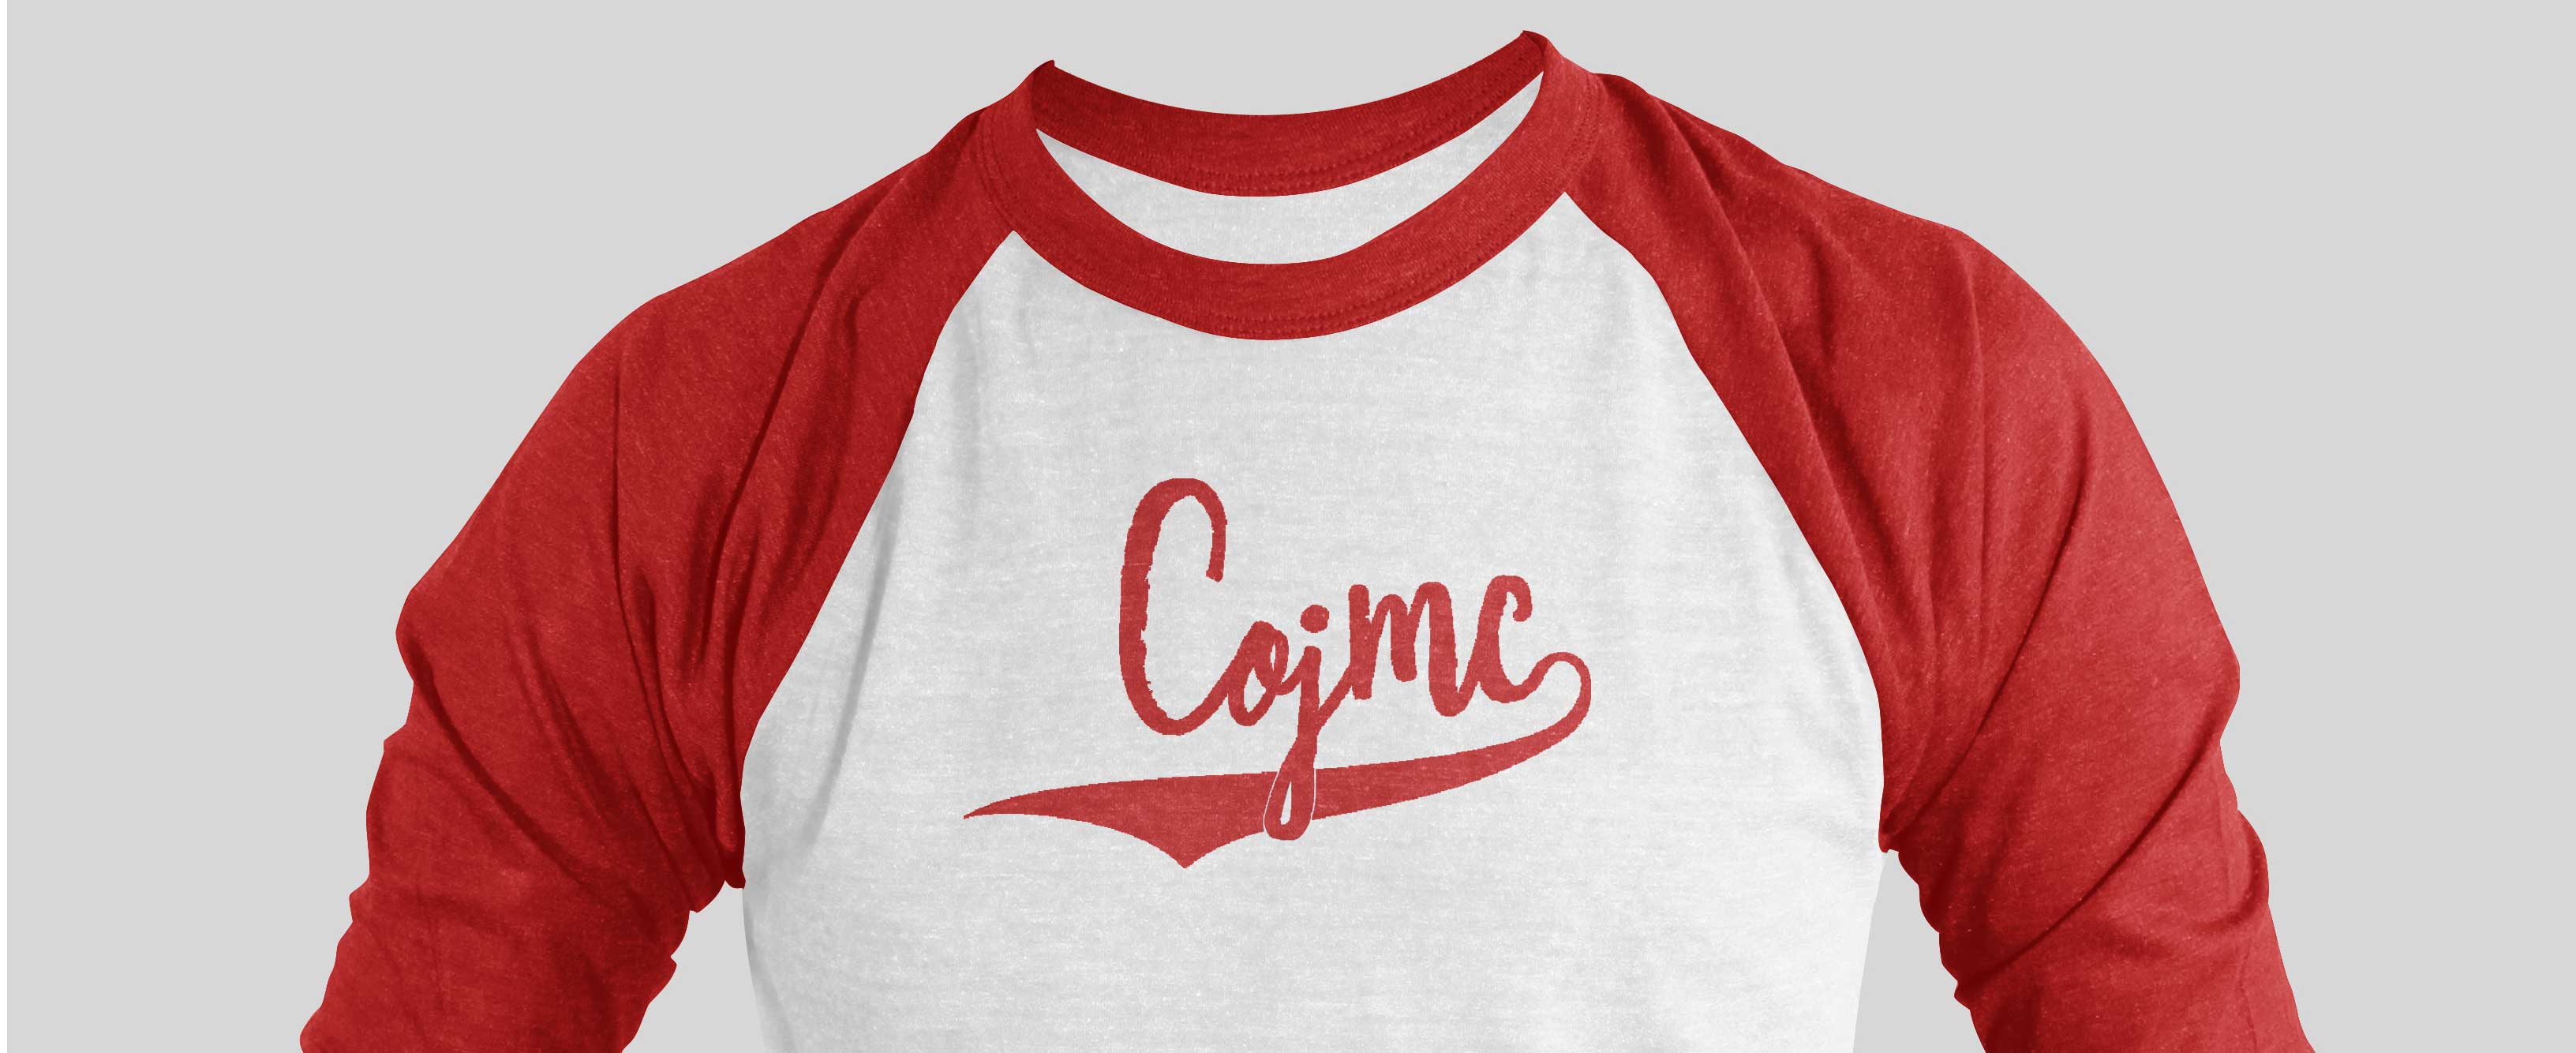 2017 CoJMC t-shirt design